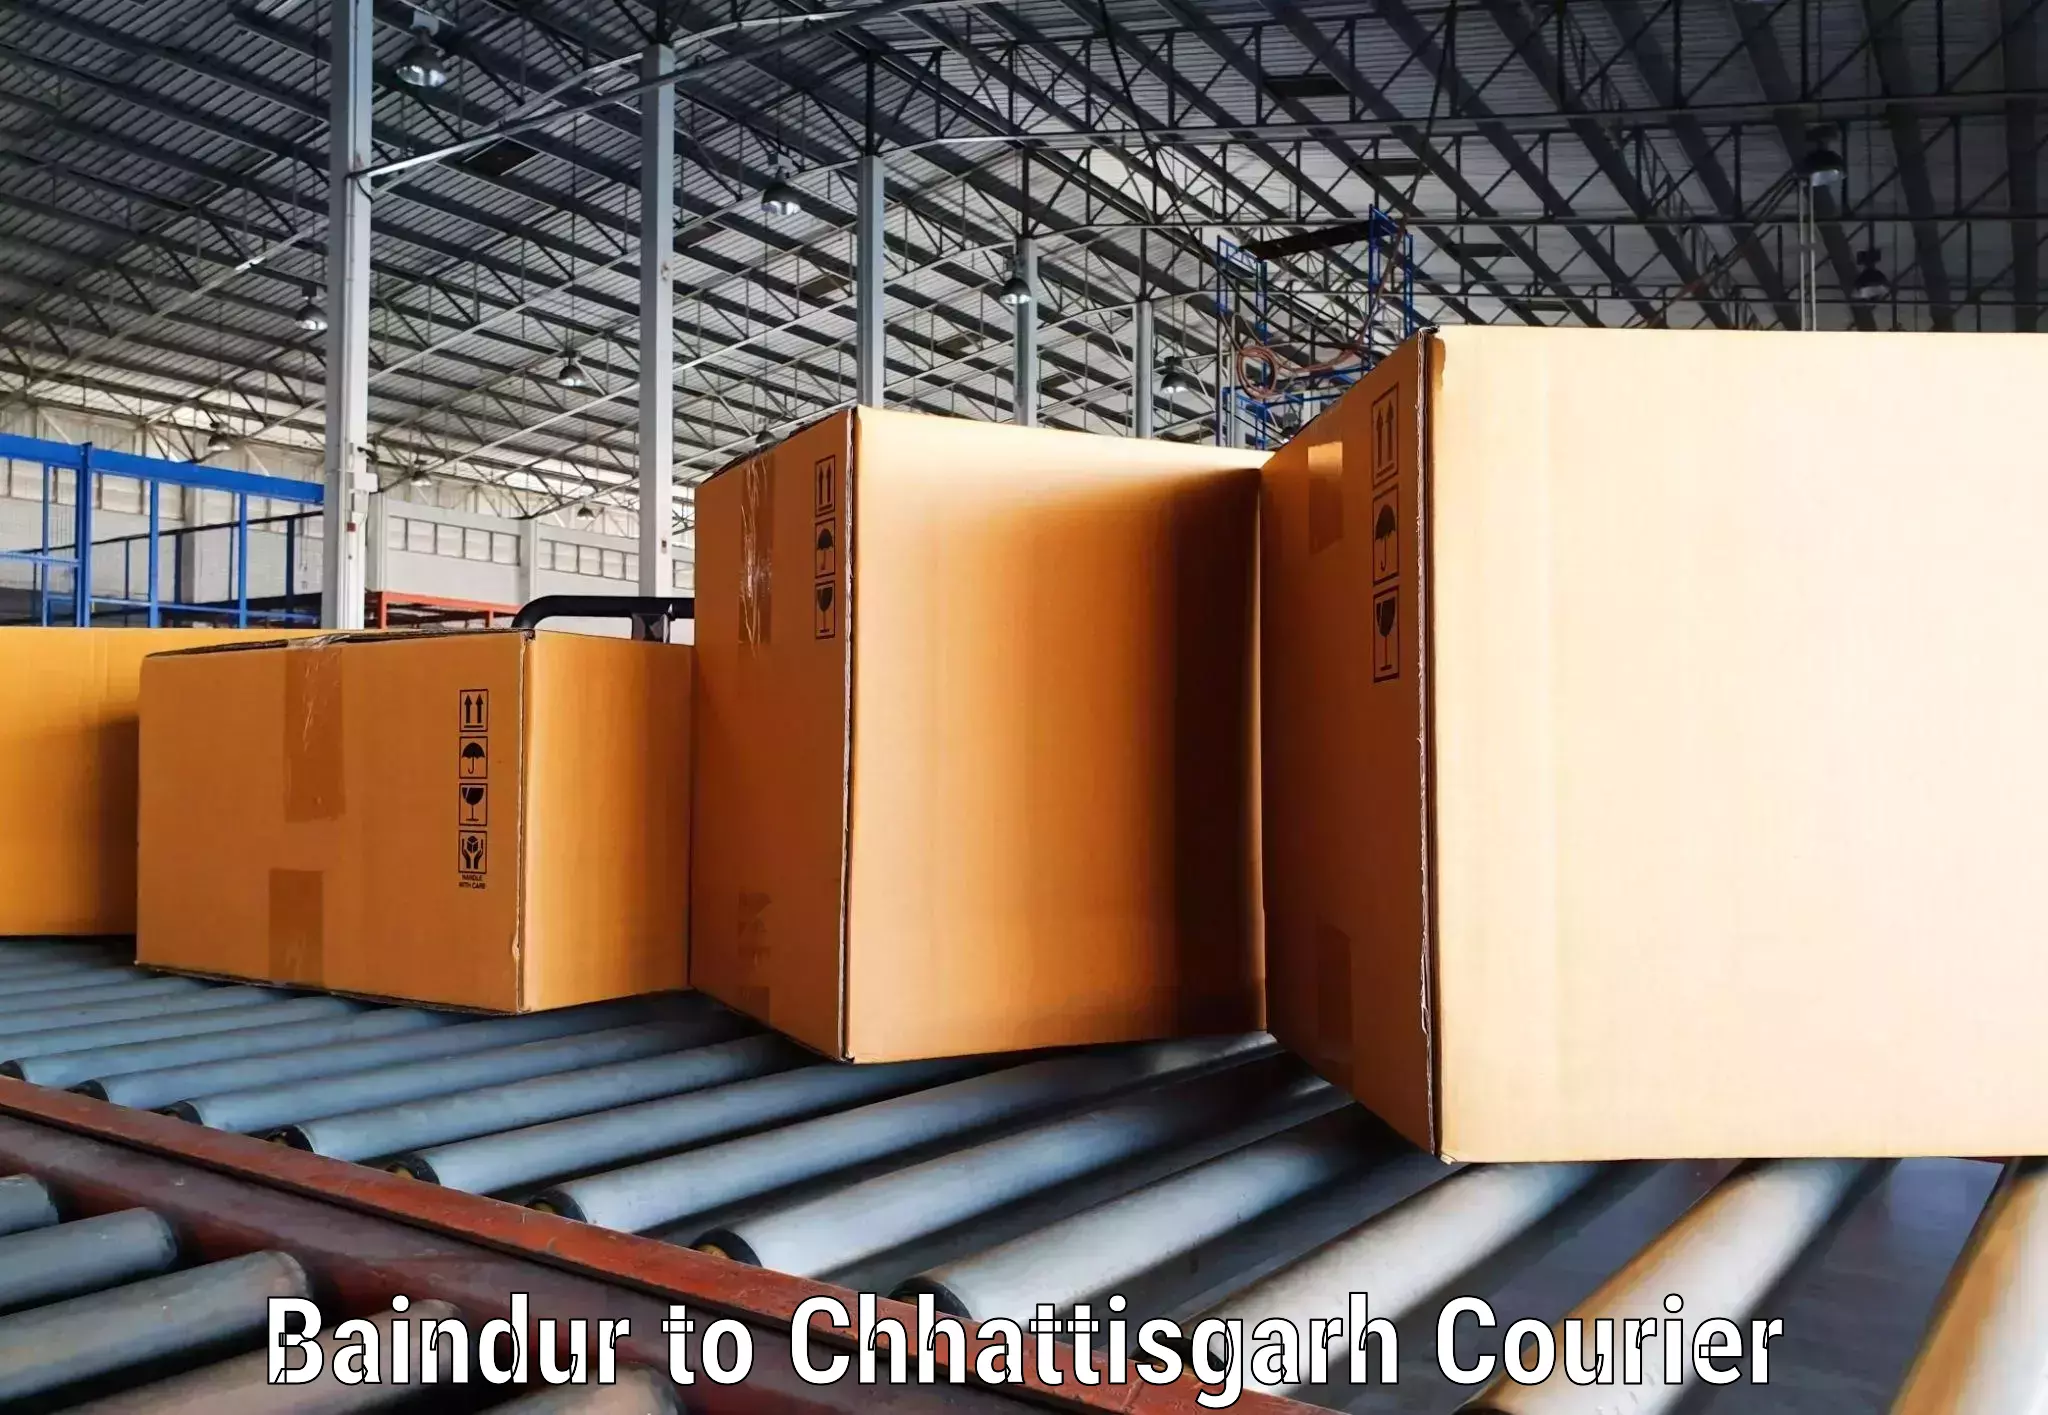 Courier service comparison Baindur to Patna Chhattisgarh